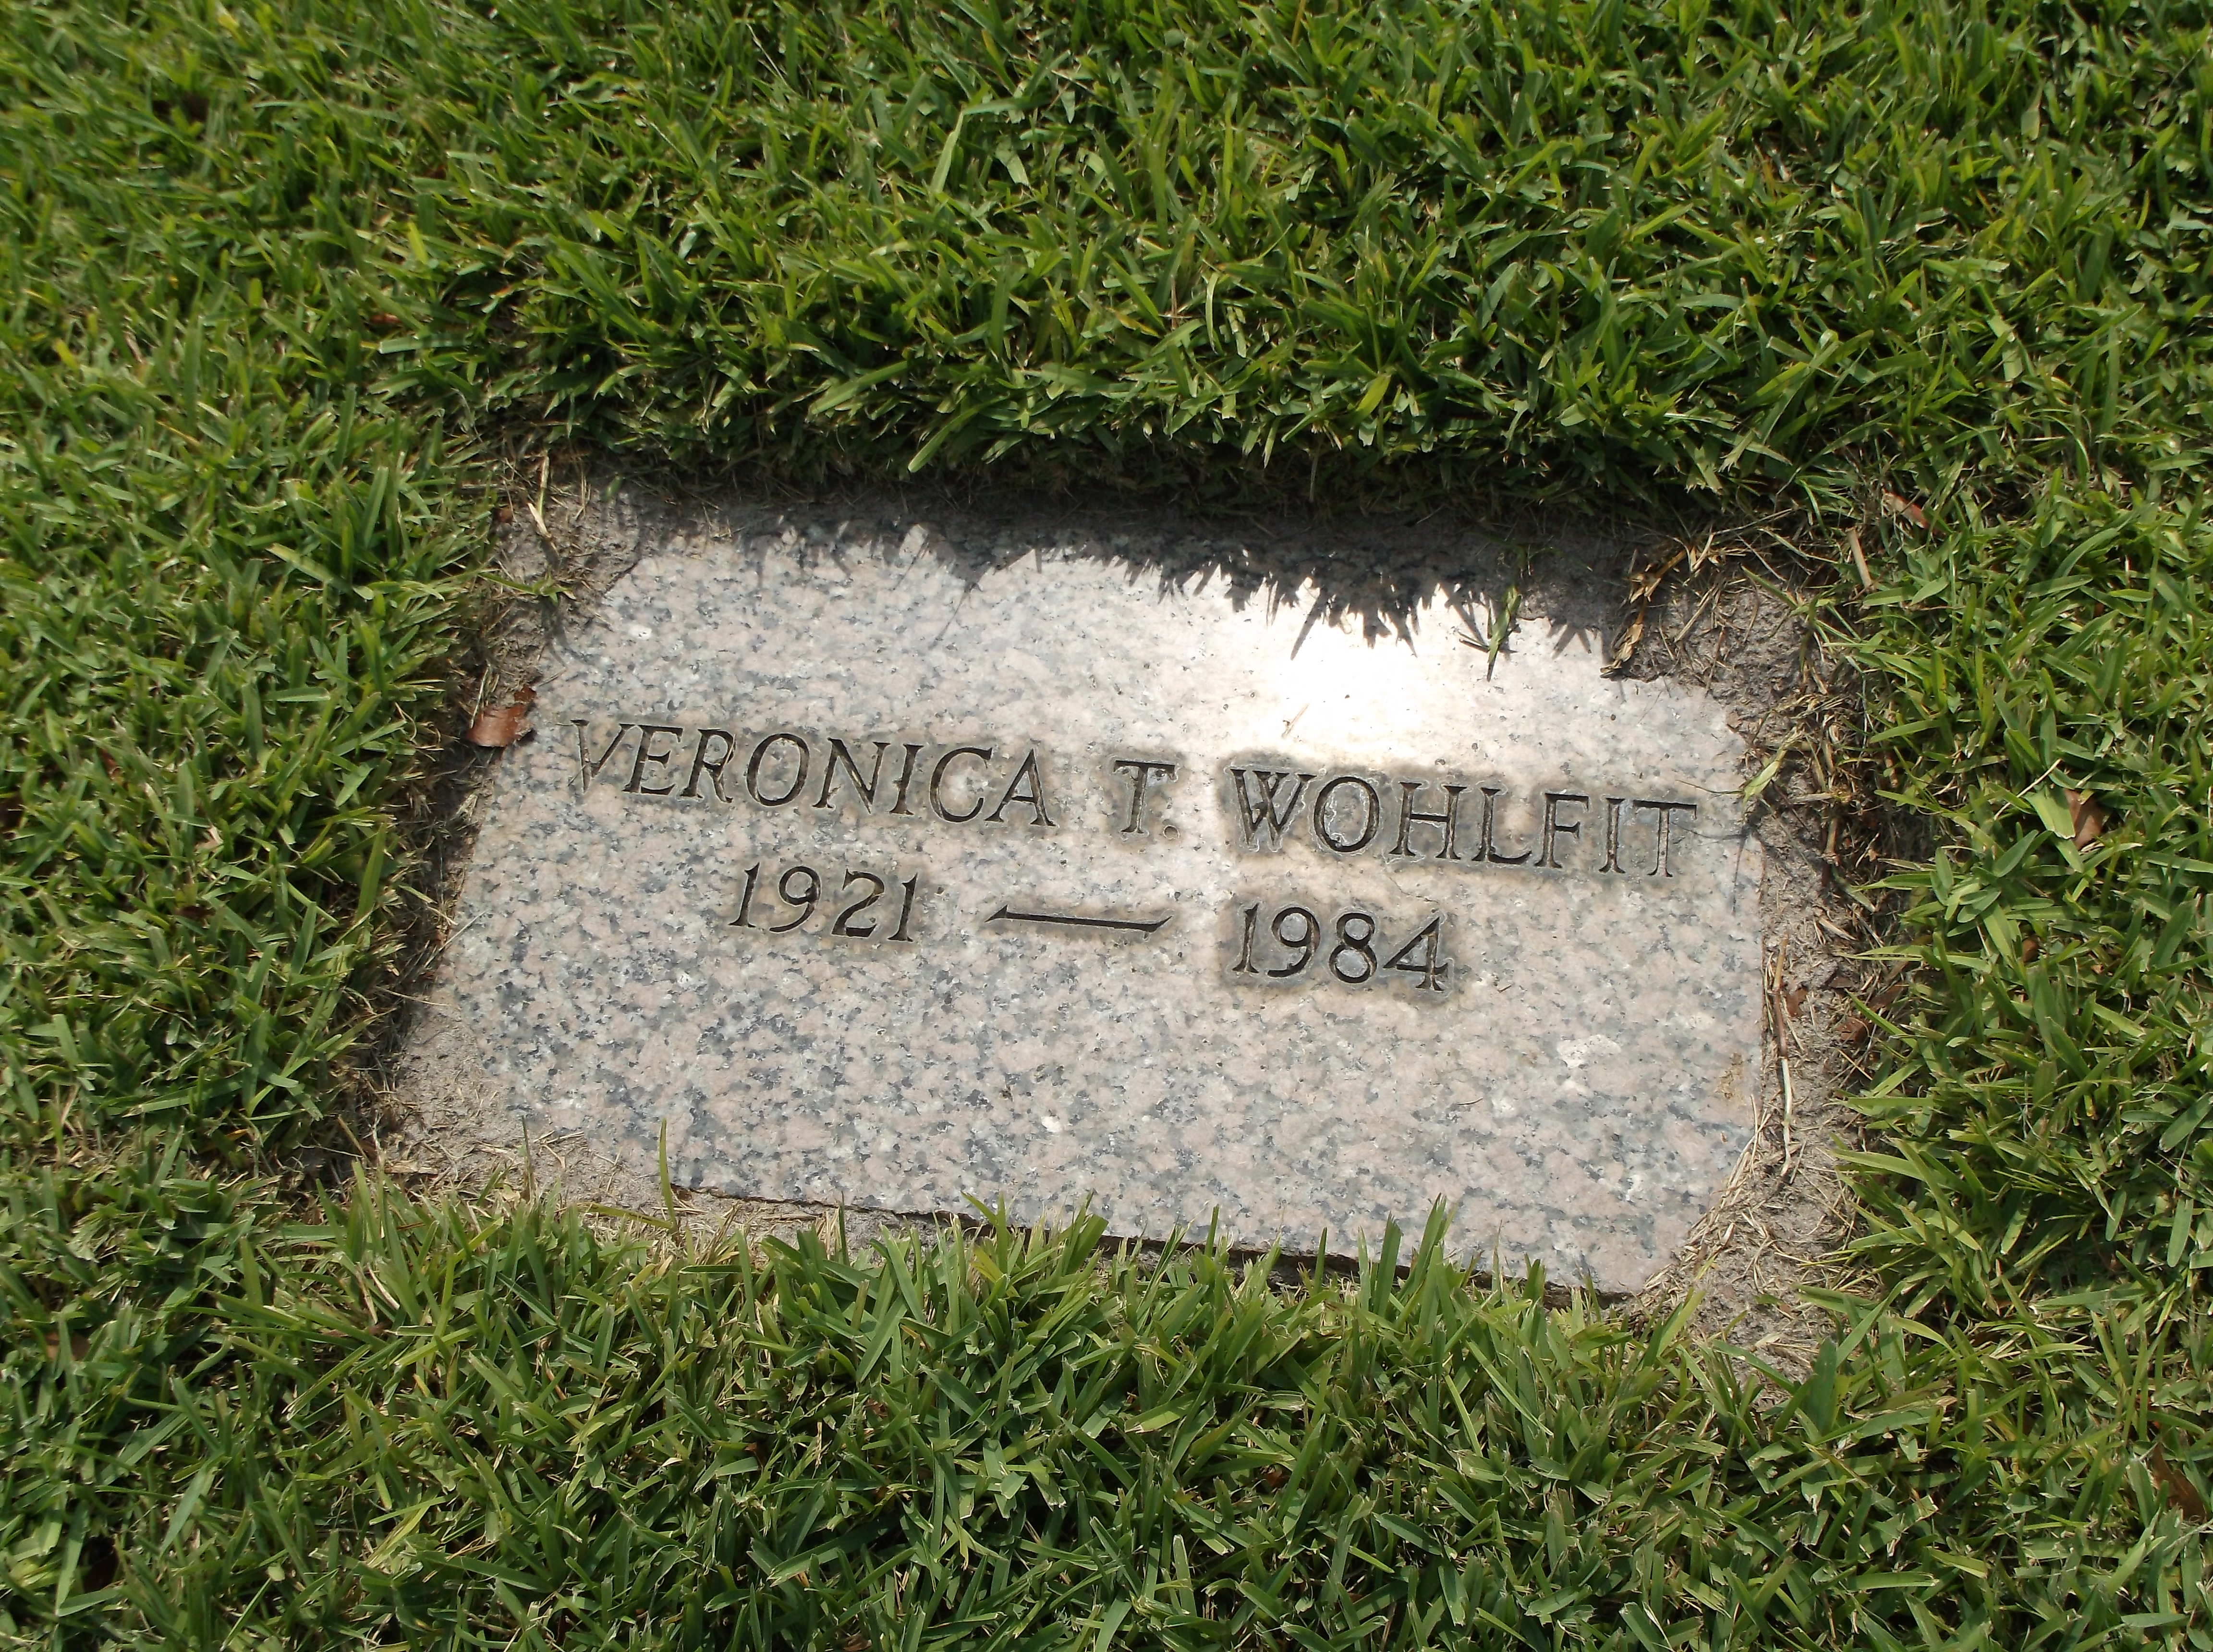 Veronica T Wohlfit